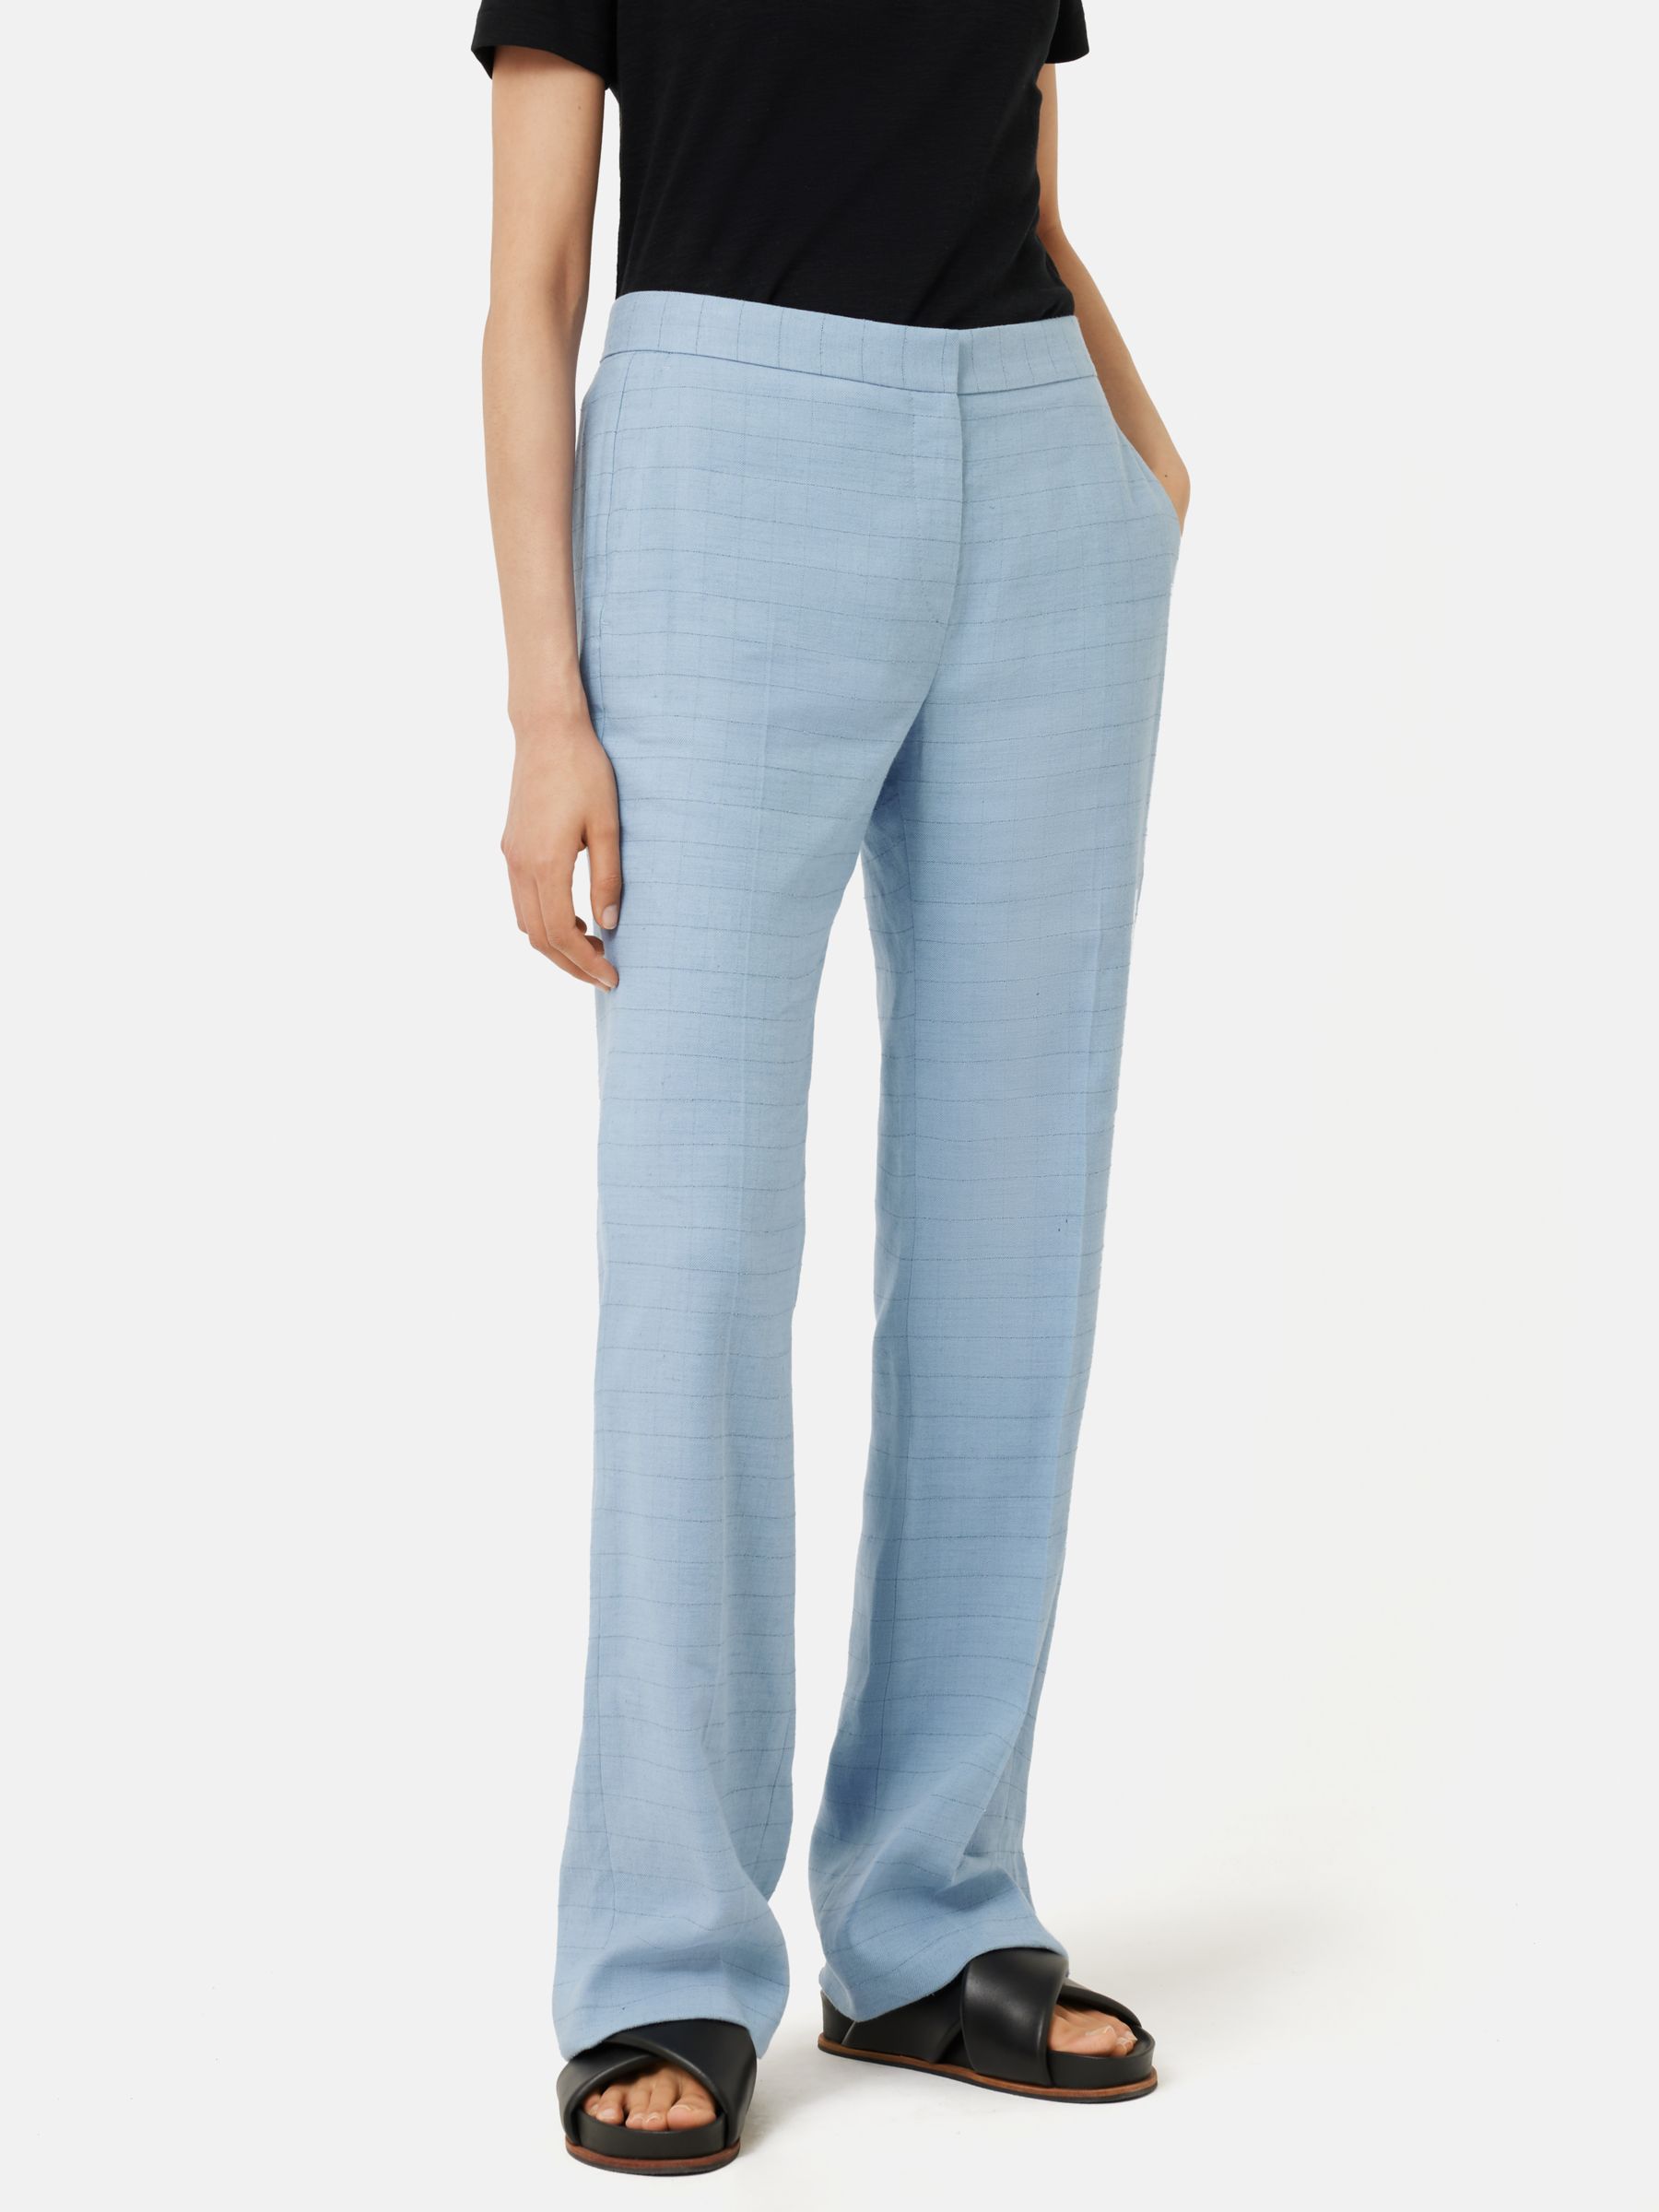 Buy Girls Linen Trouser Pants, Blue Online at 56% OFF